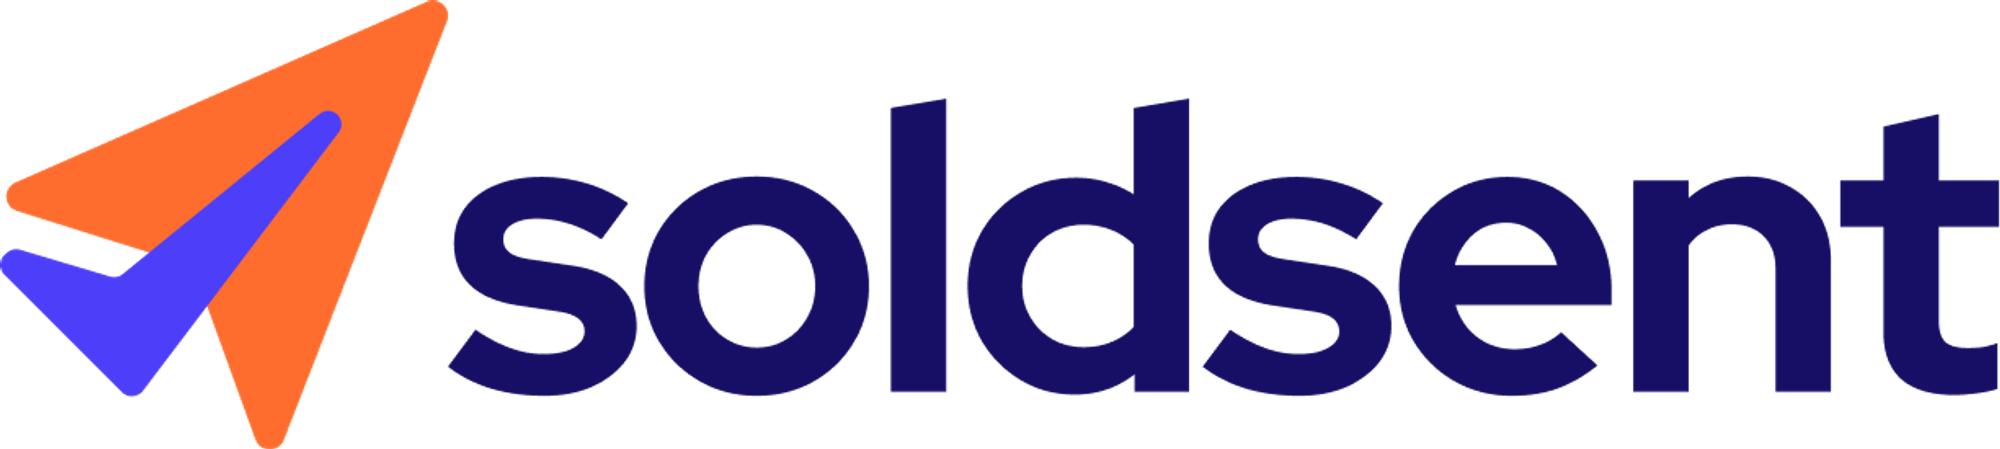 Modern logo design for soldsent.com